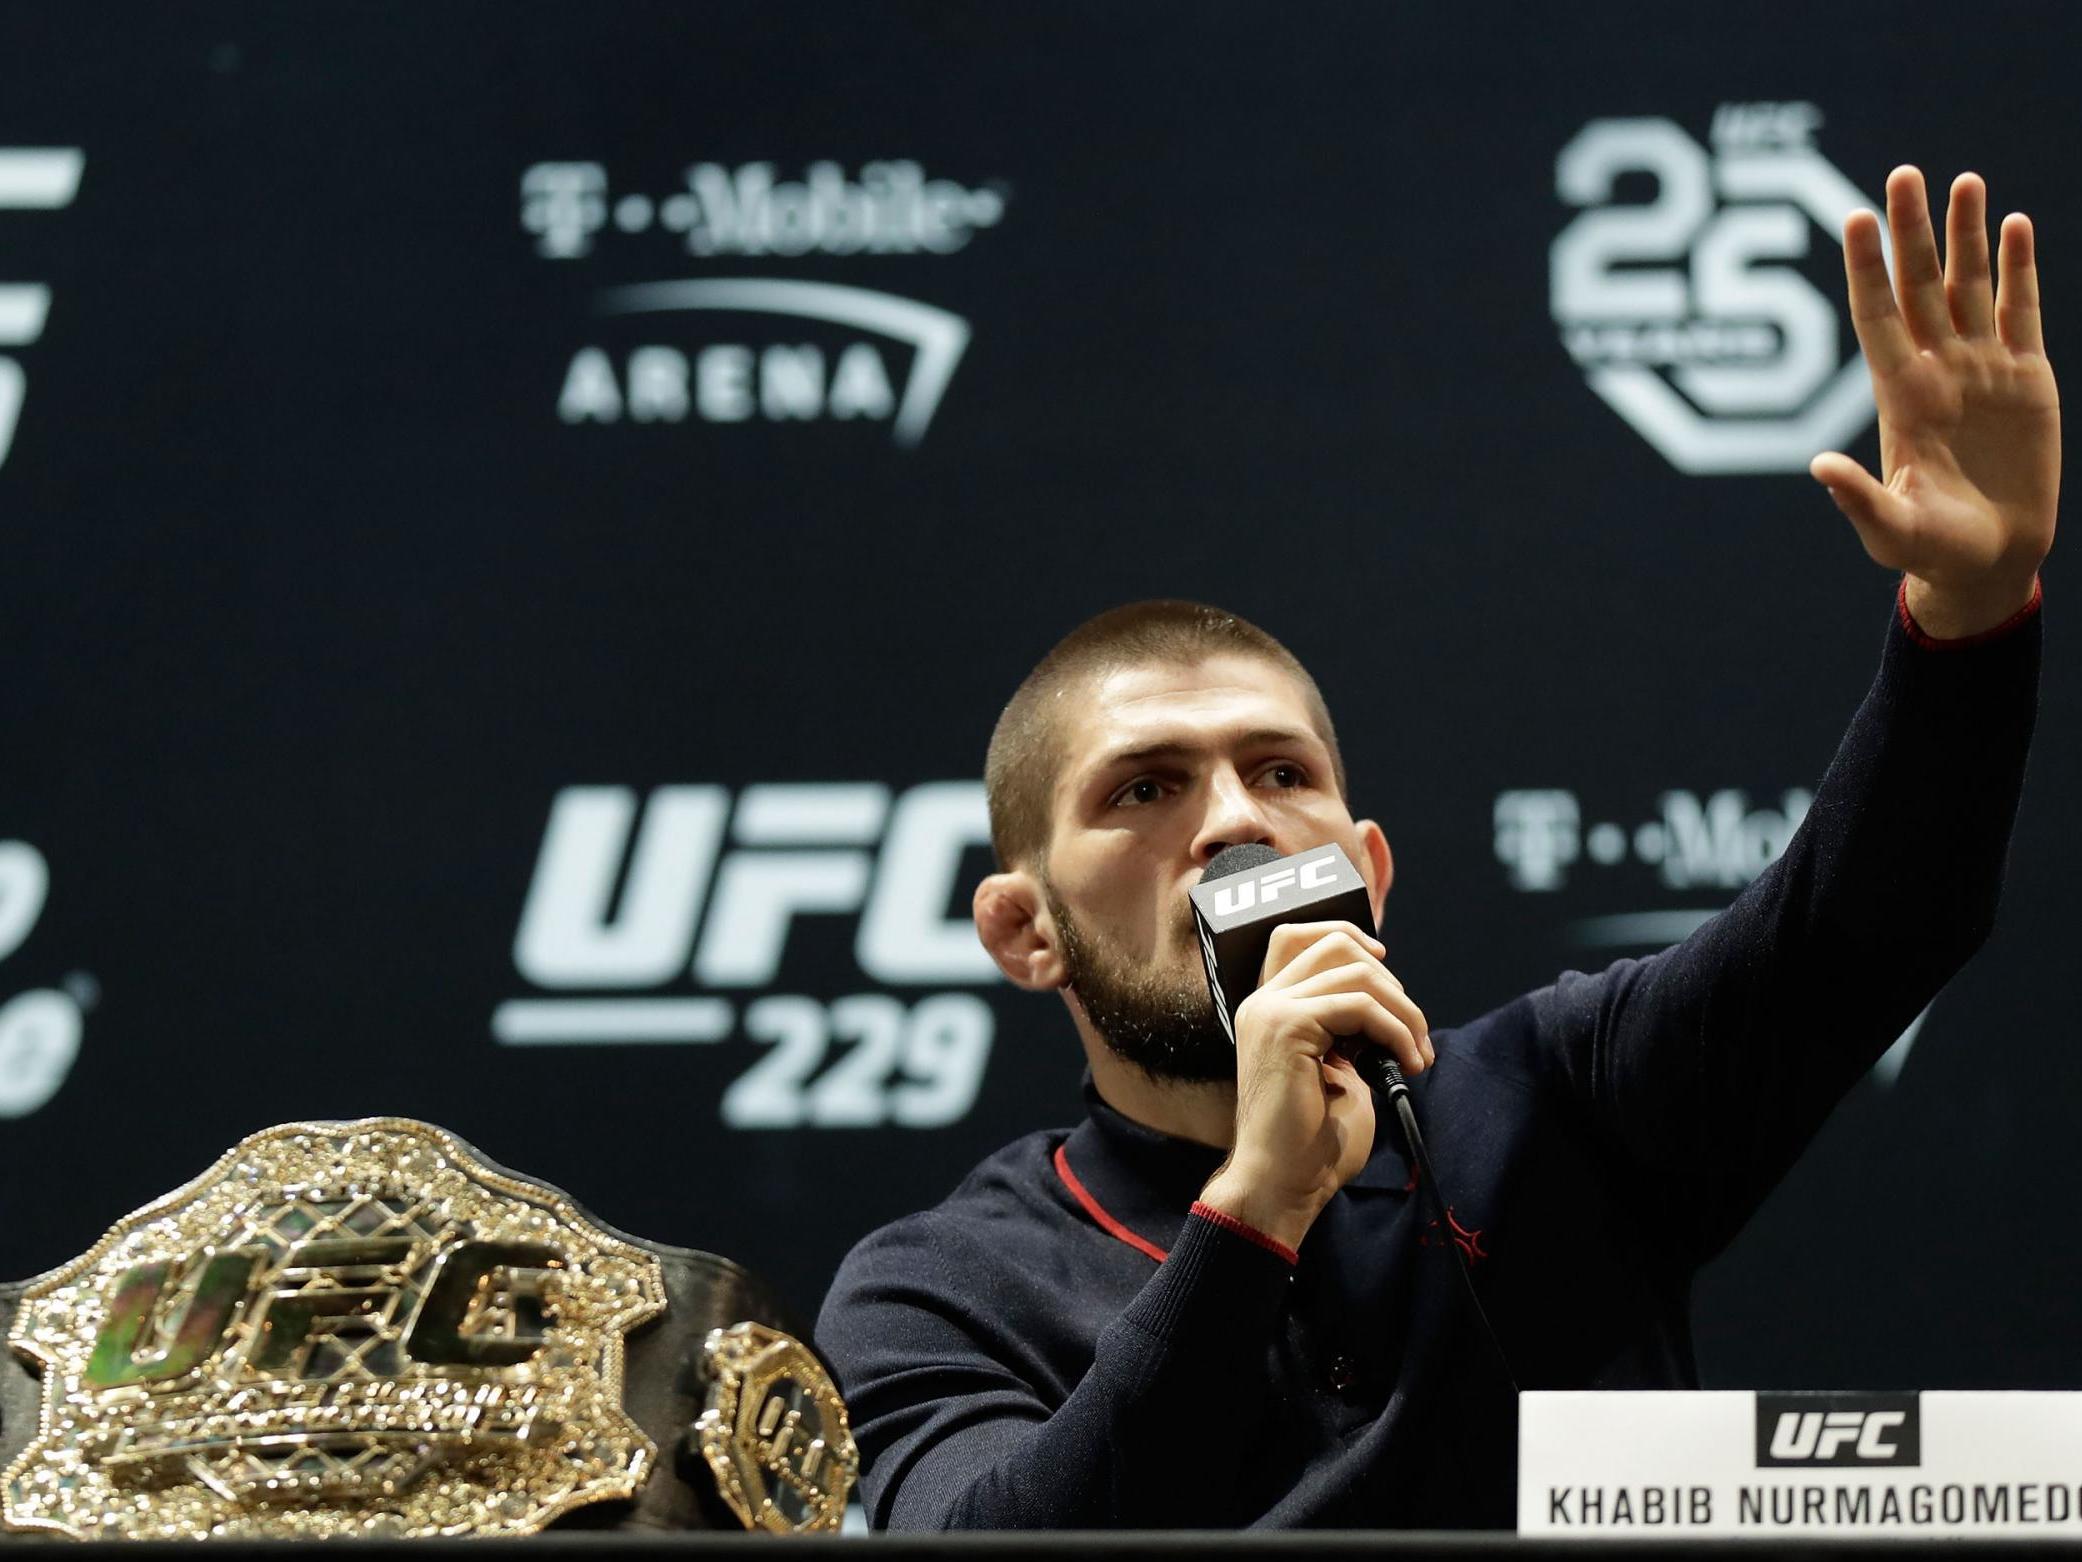 Khabib Nurmagomedov vs Tony Ferguson will go ahead despite coronavirus chaos, says UFC president Dana White